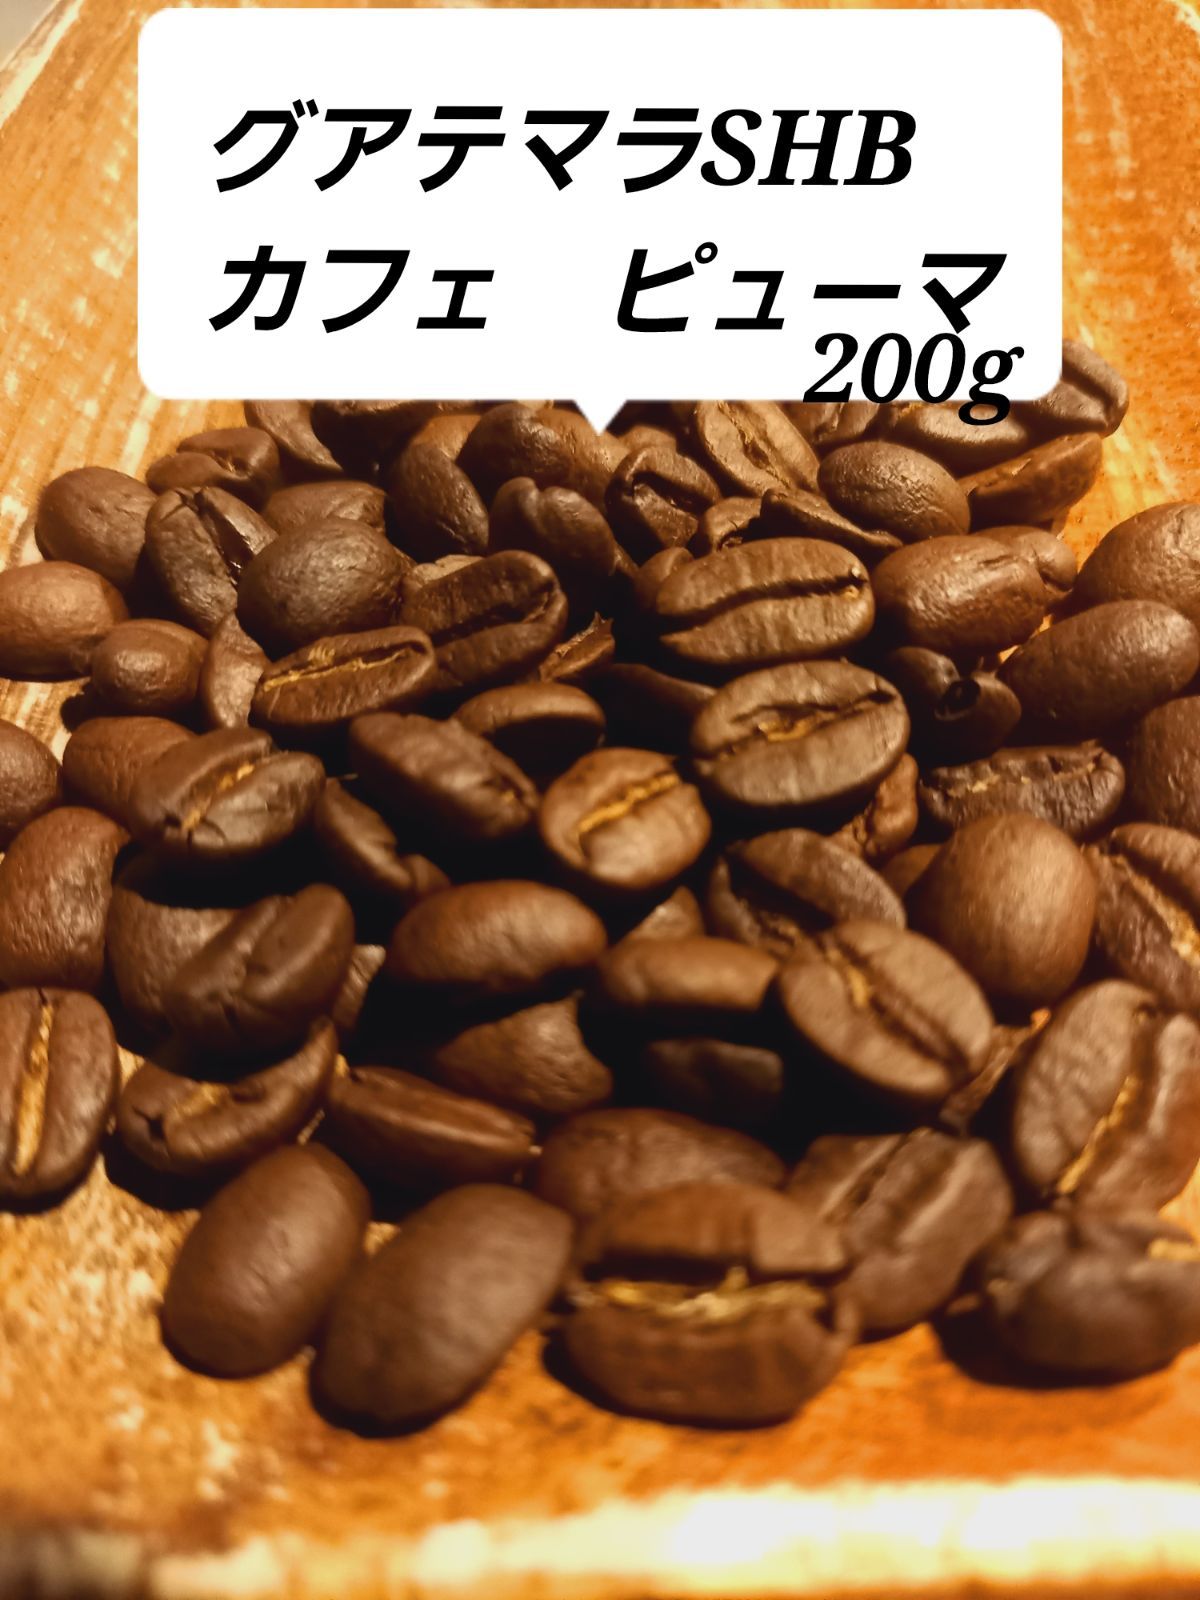 200g 珈琲 自家焙煎コーヒー豆 グアテマラSHB - 8